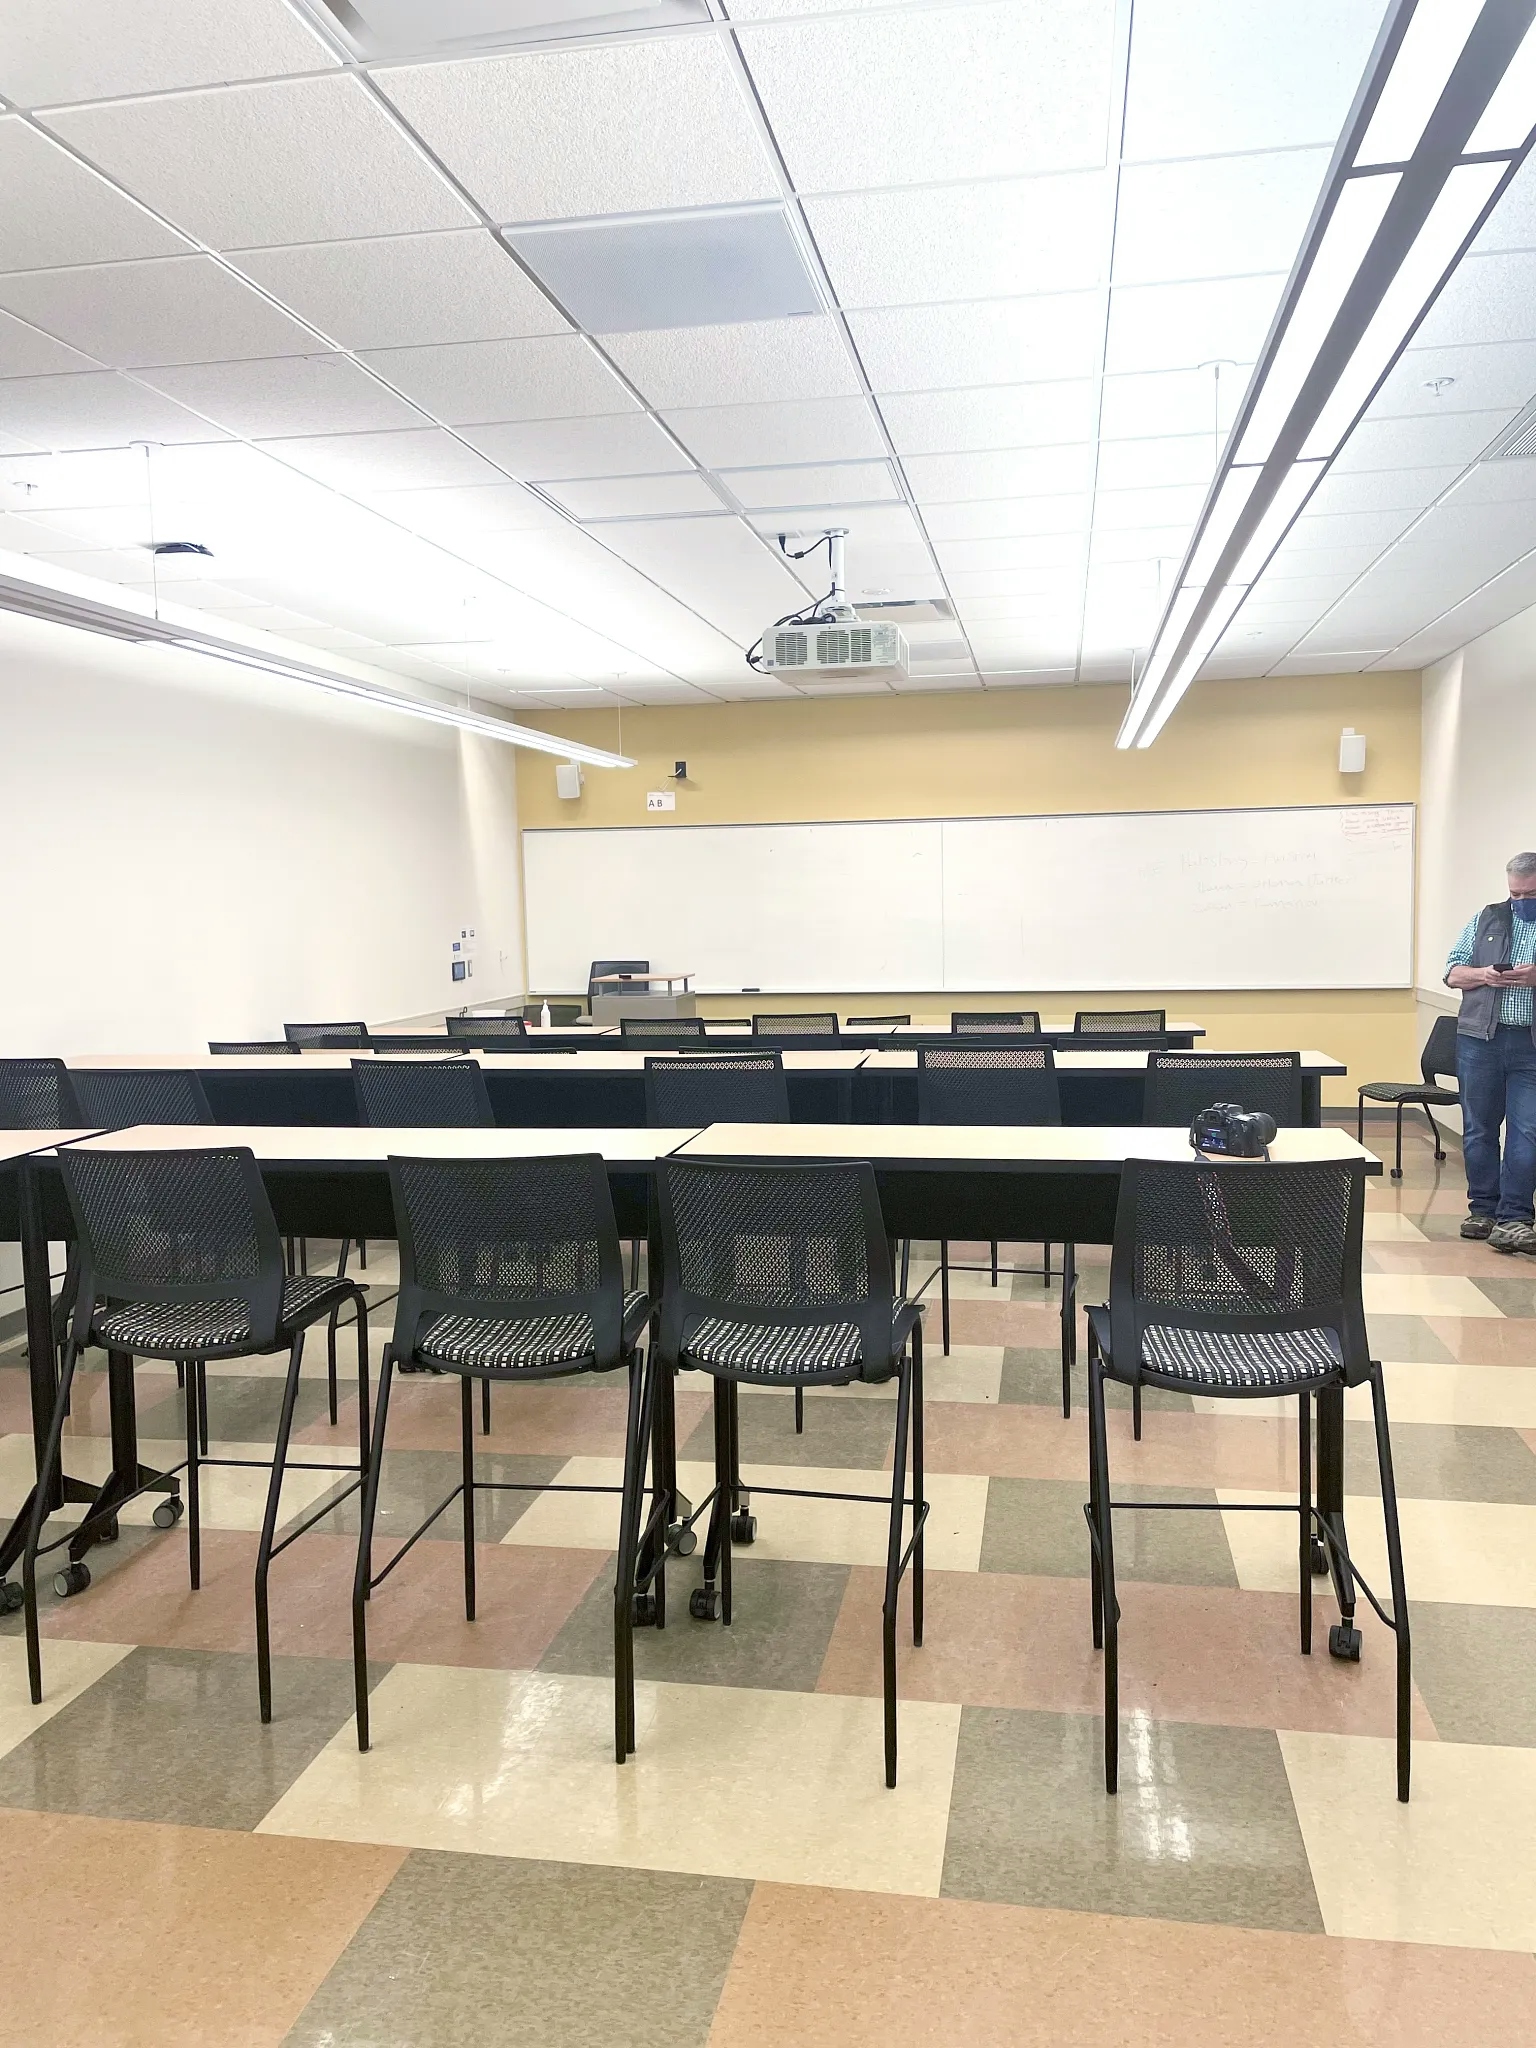 University of New Hampshire- classroom